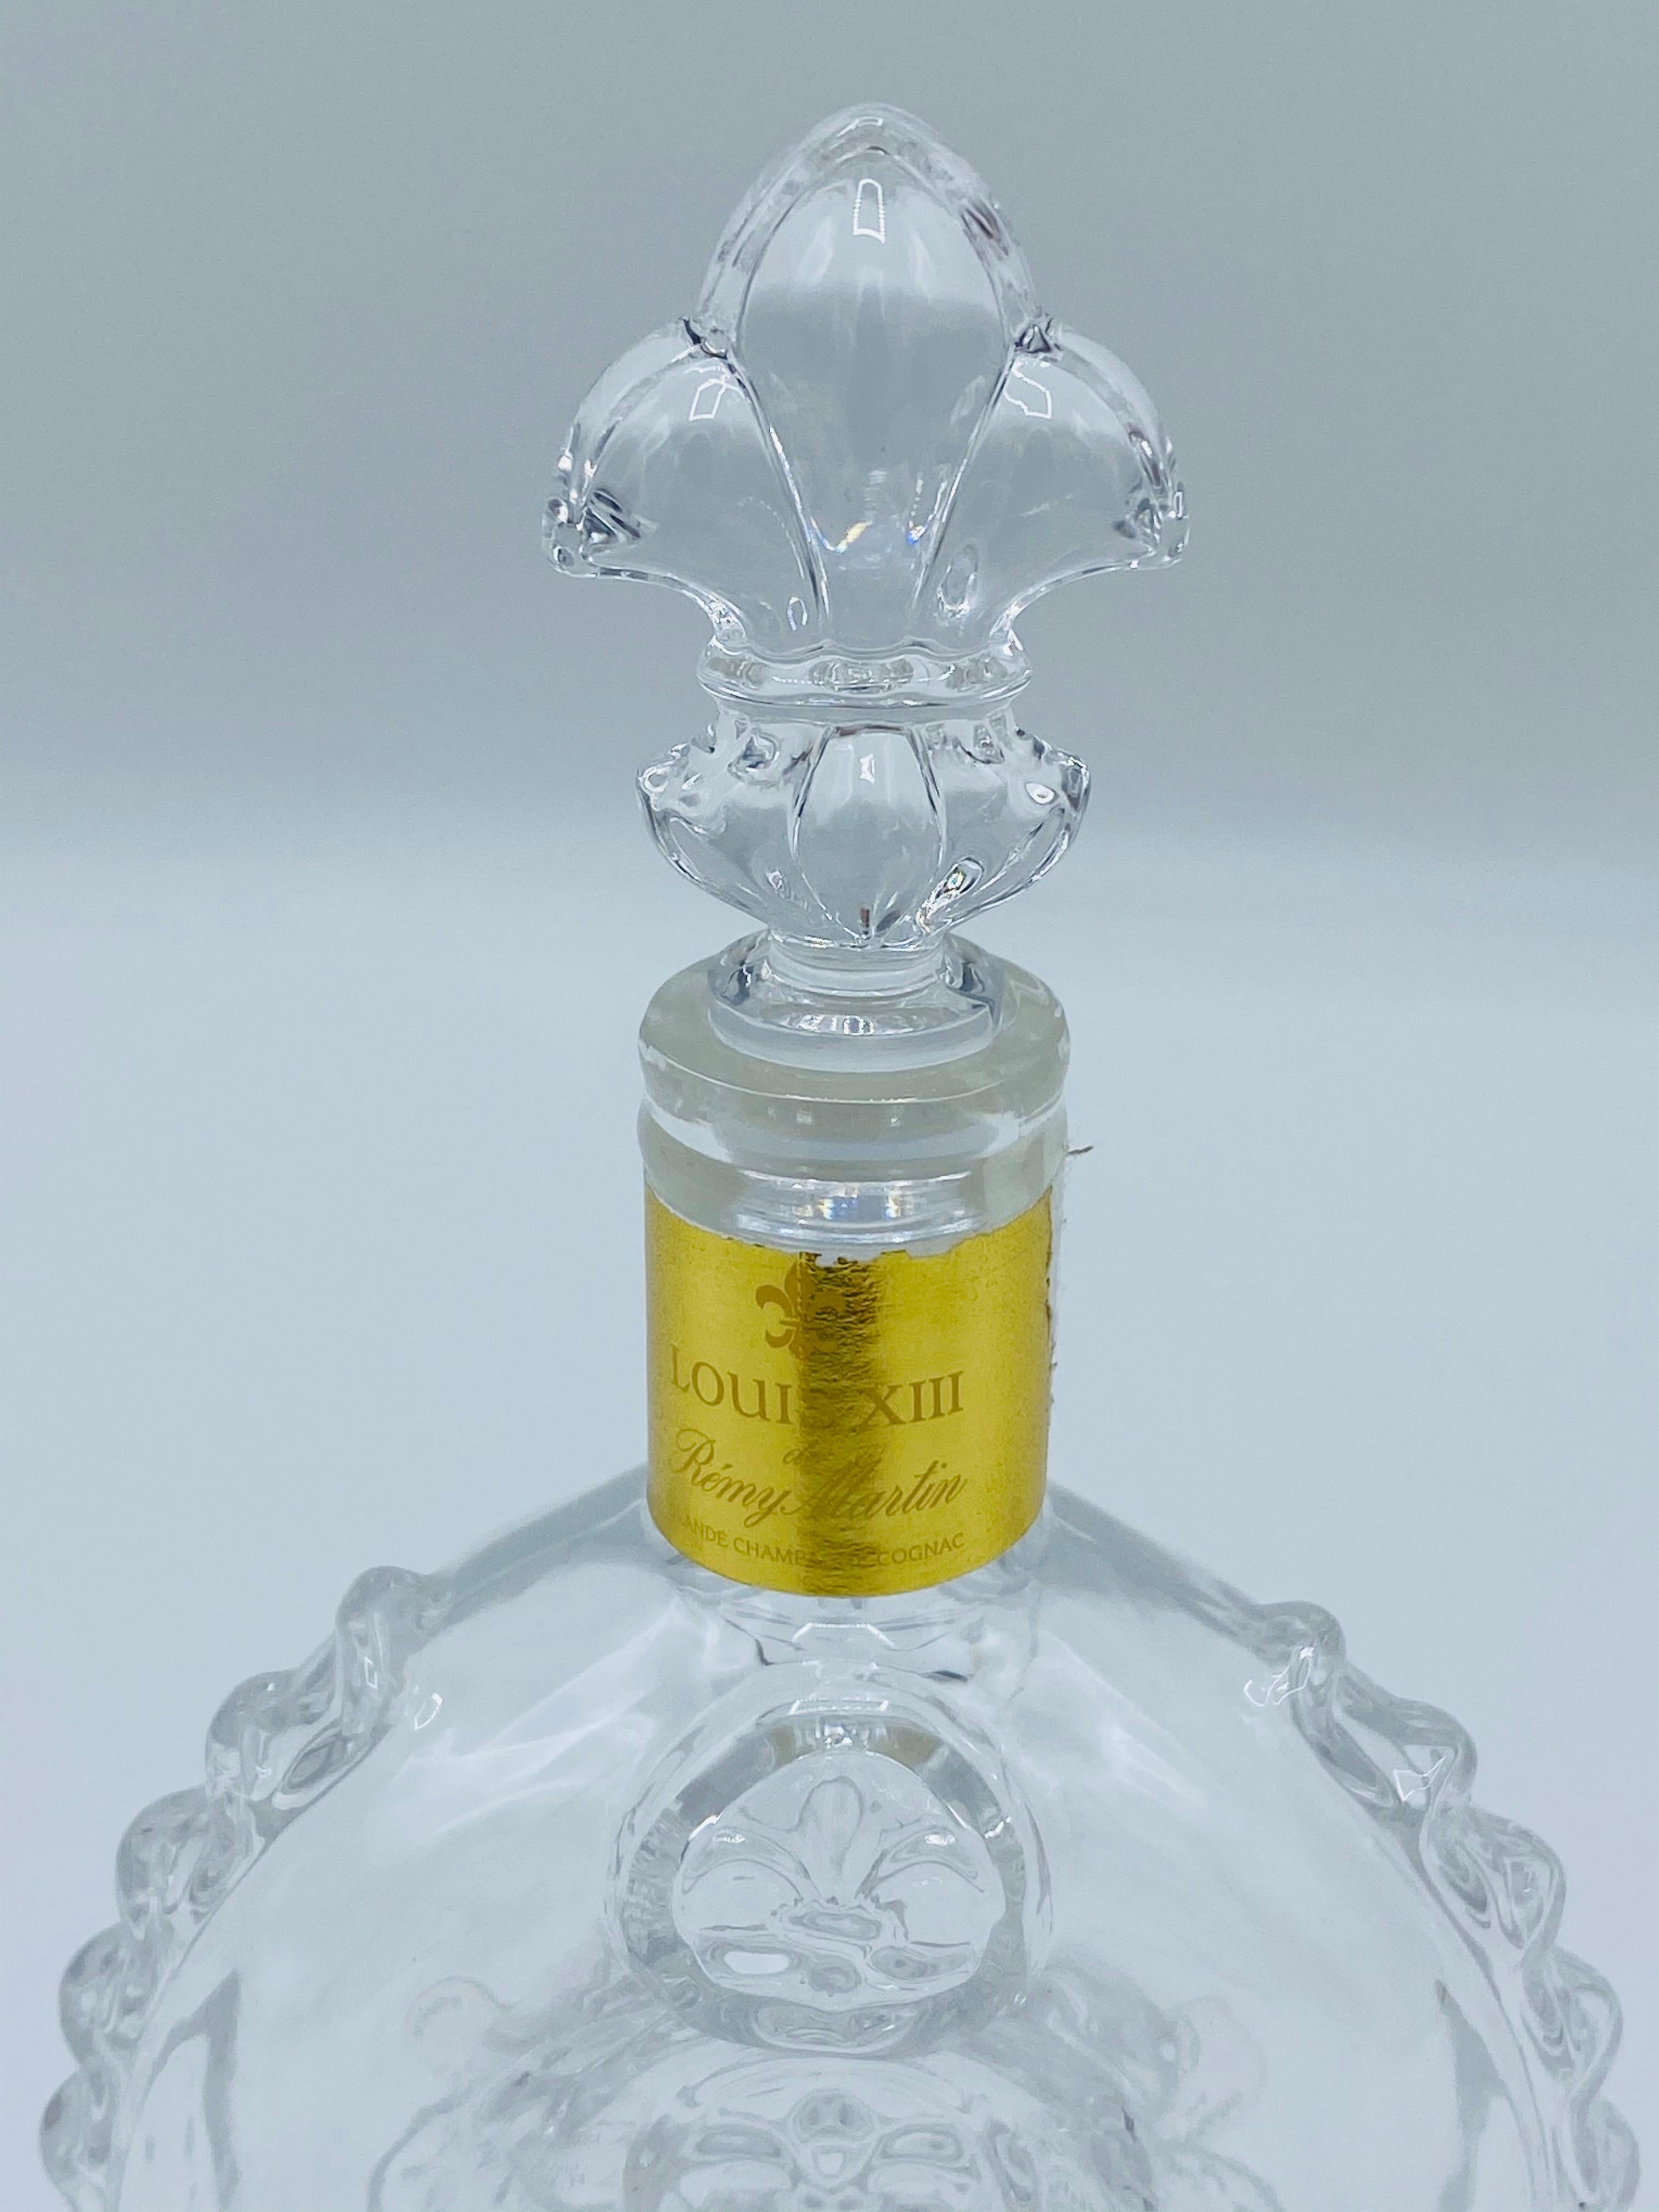 Vintage Baccarat Crystal Louis XIII Remy Martin Cognac Liquor Decanter Set, 50ml 6